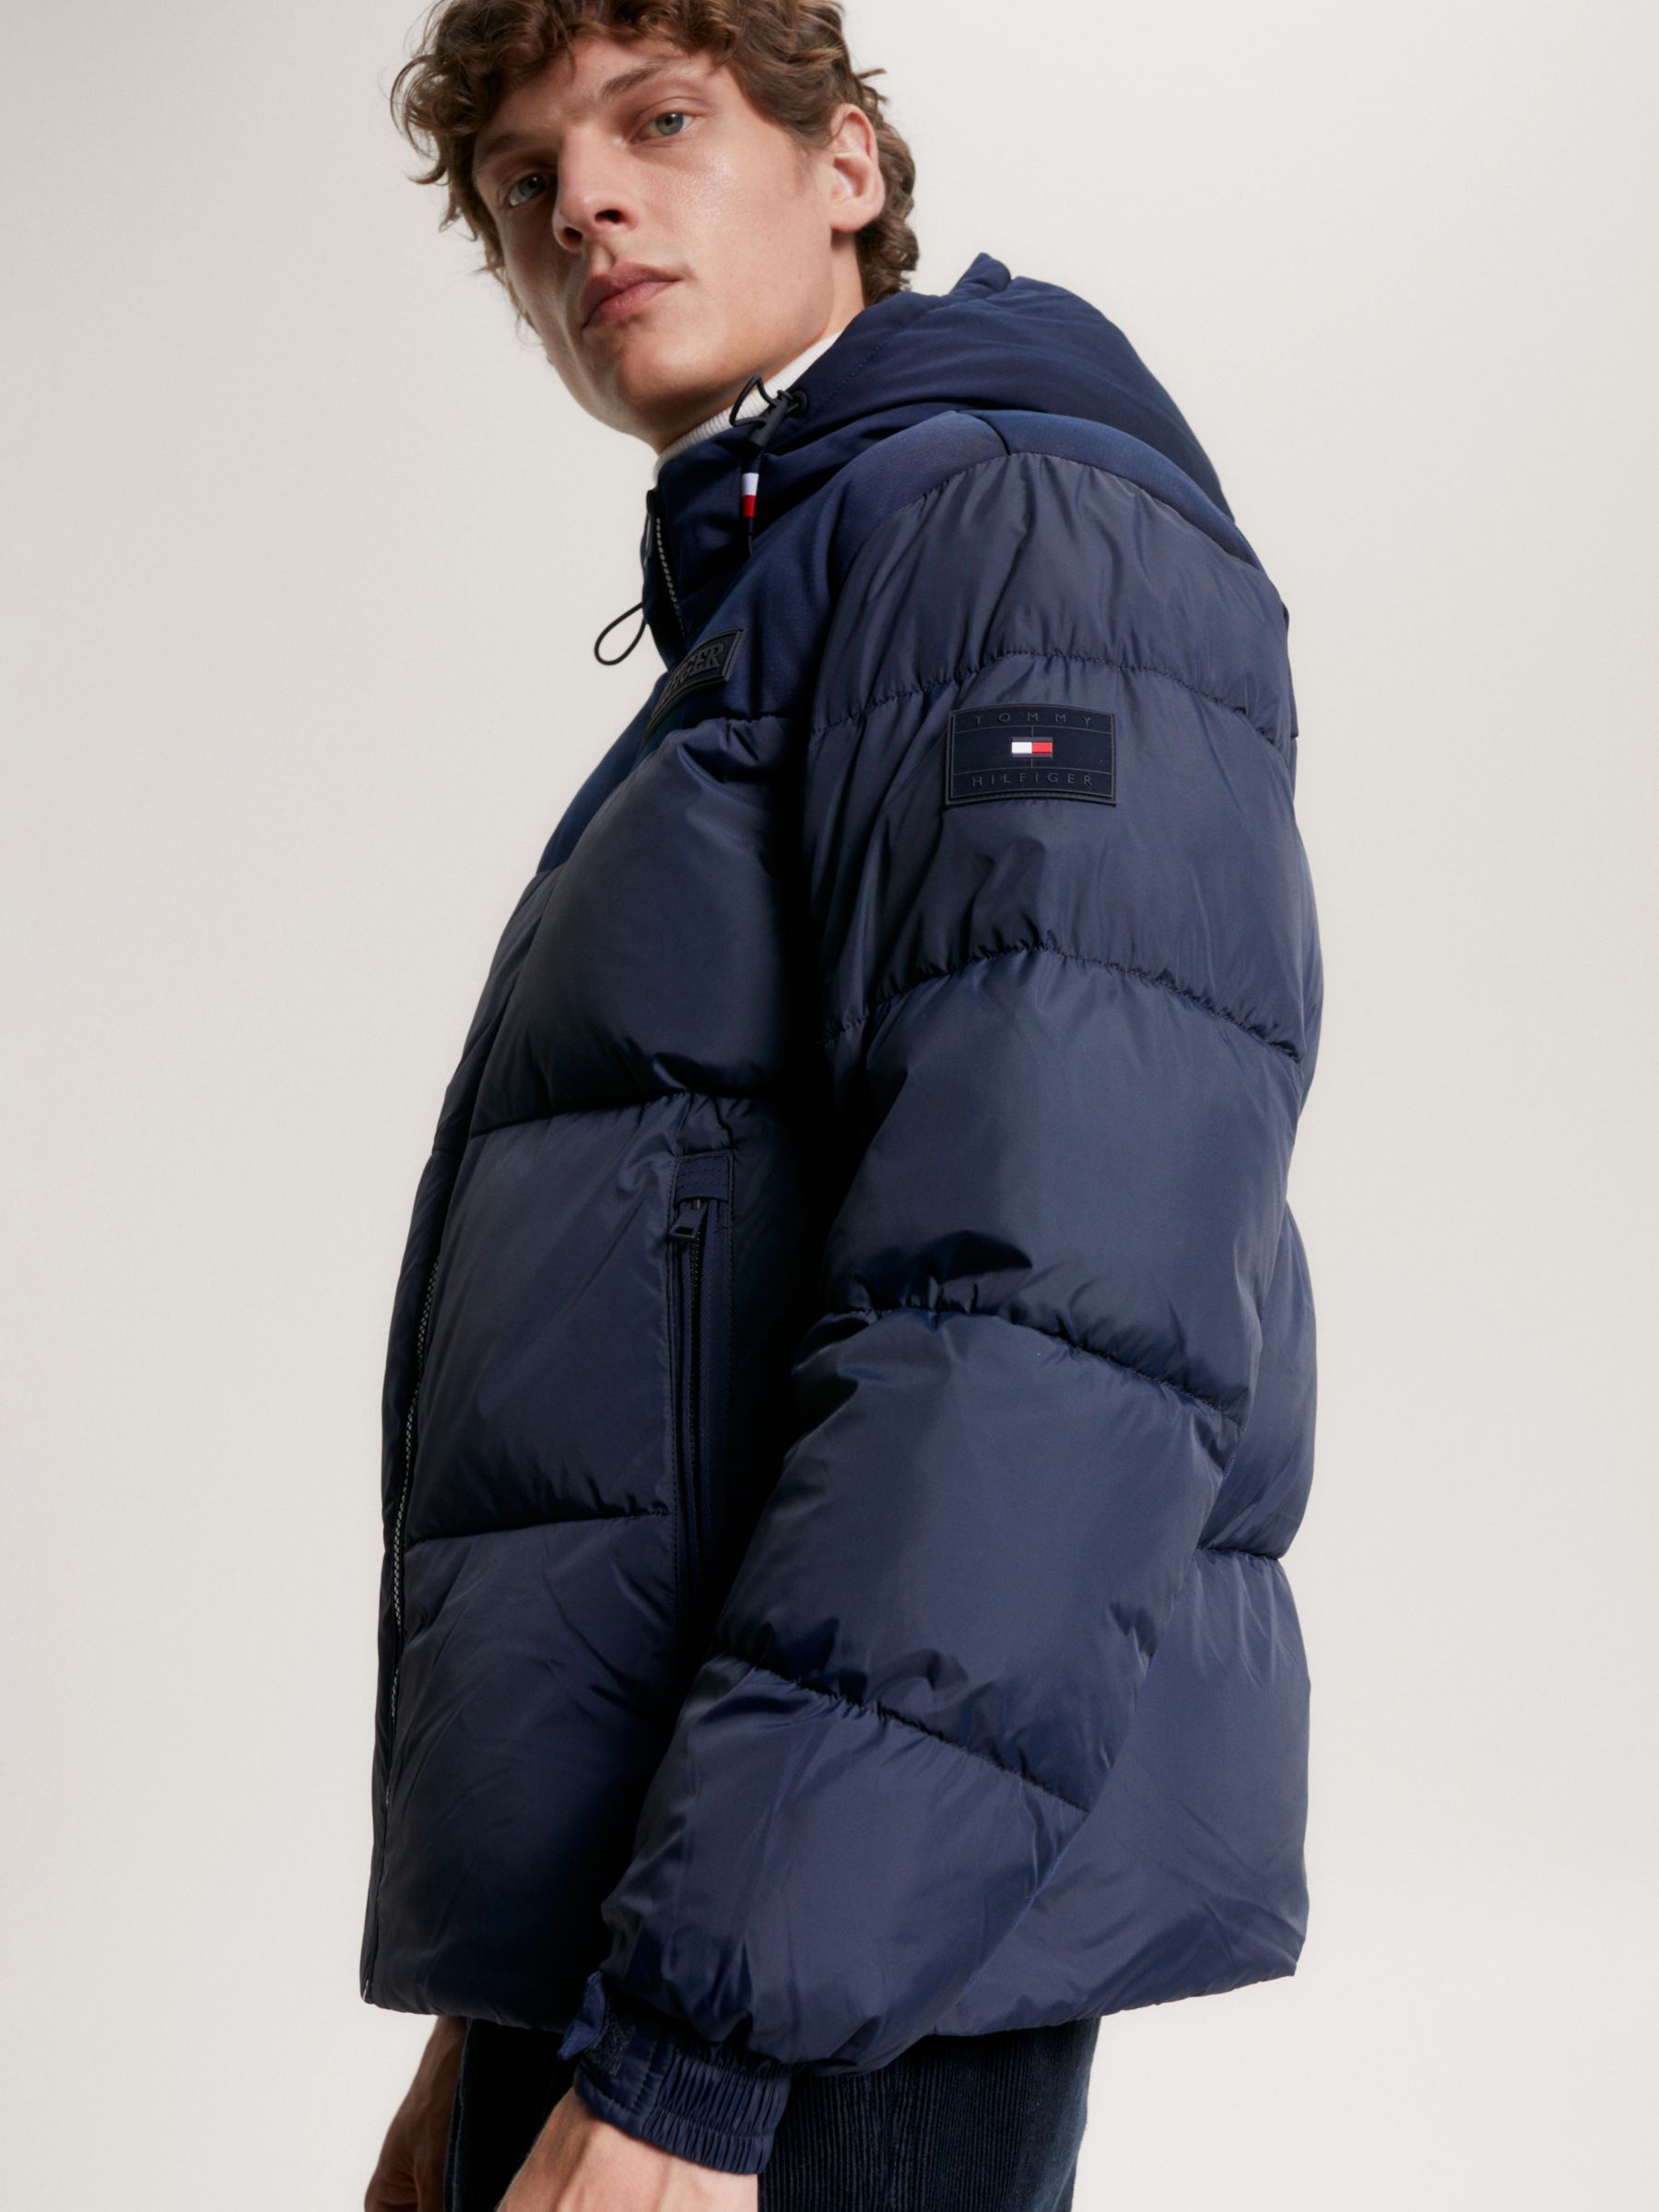 Tommy Hilfiger New York Puffer Jacket, Desert Sky at John Lewis & Partners